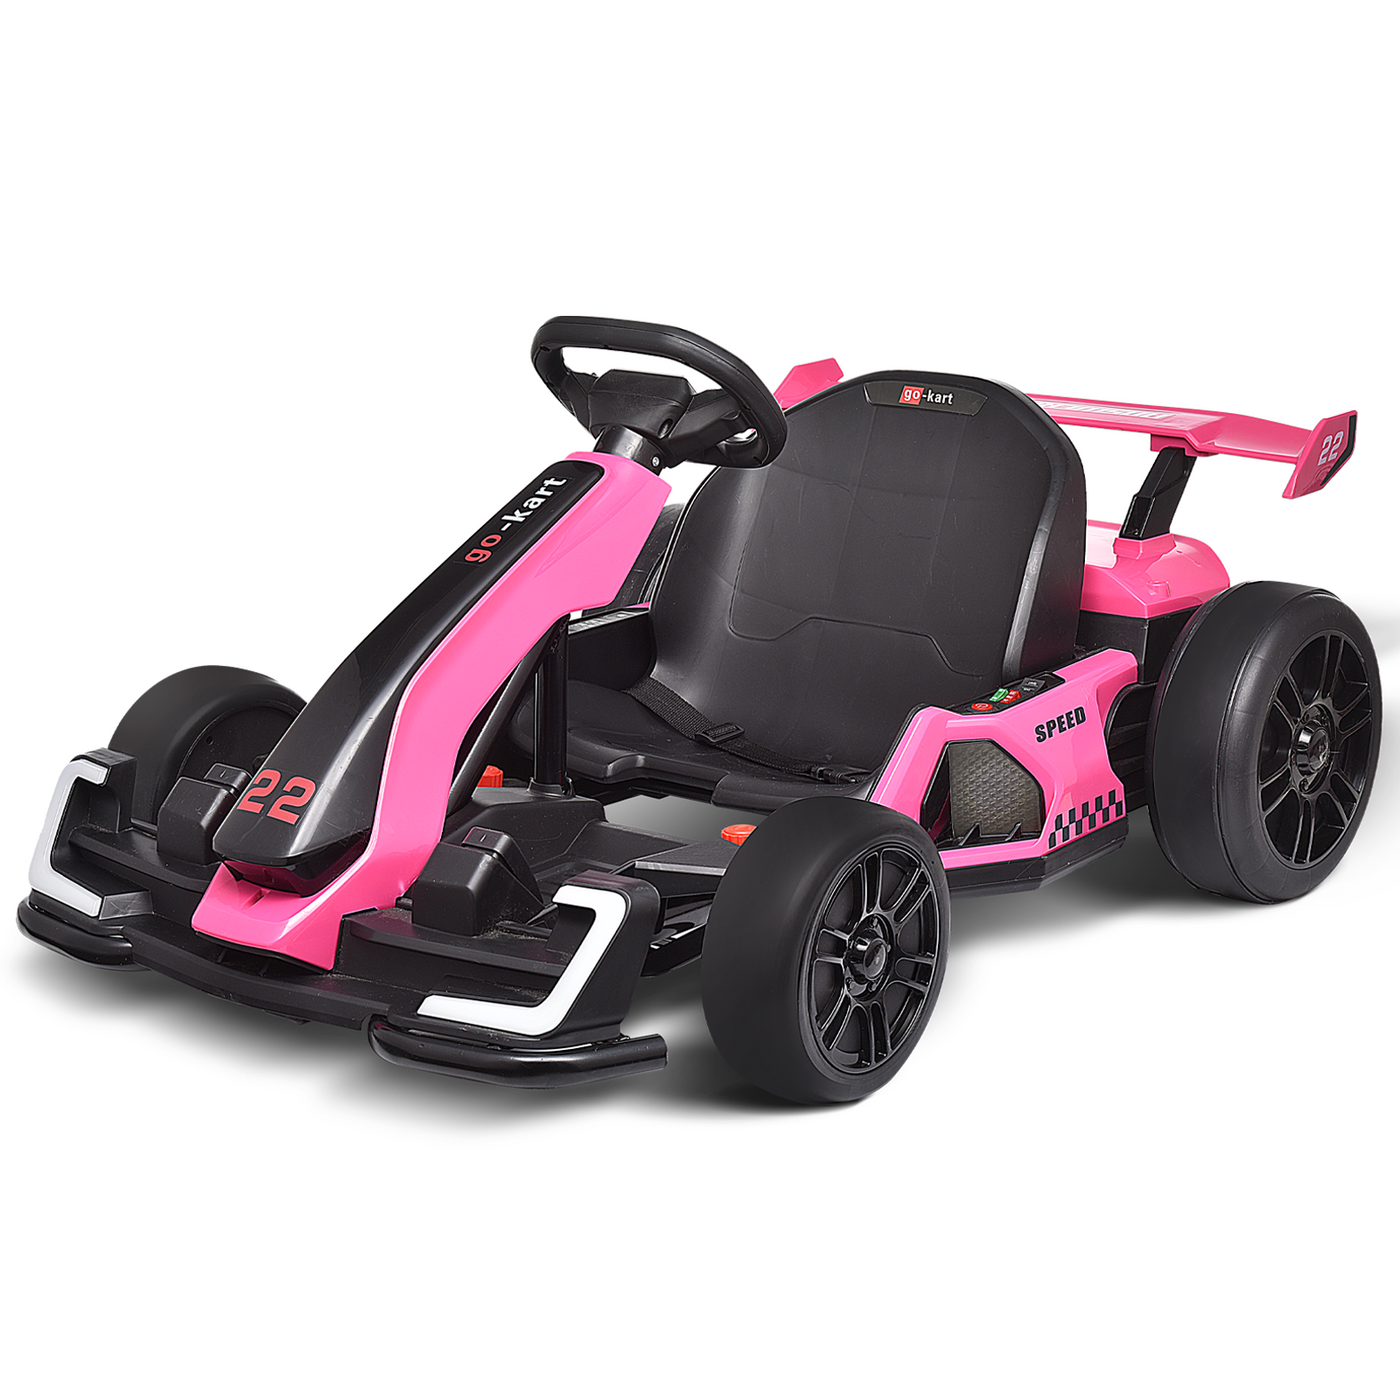 Blitzshark 24V Kids Go Kart 300W Powerful Electric Pedal Go Kart, with 2X150W Strong Motors, Drift/Sports Mode, EVA Tires, Length Adjustment, Blue